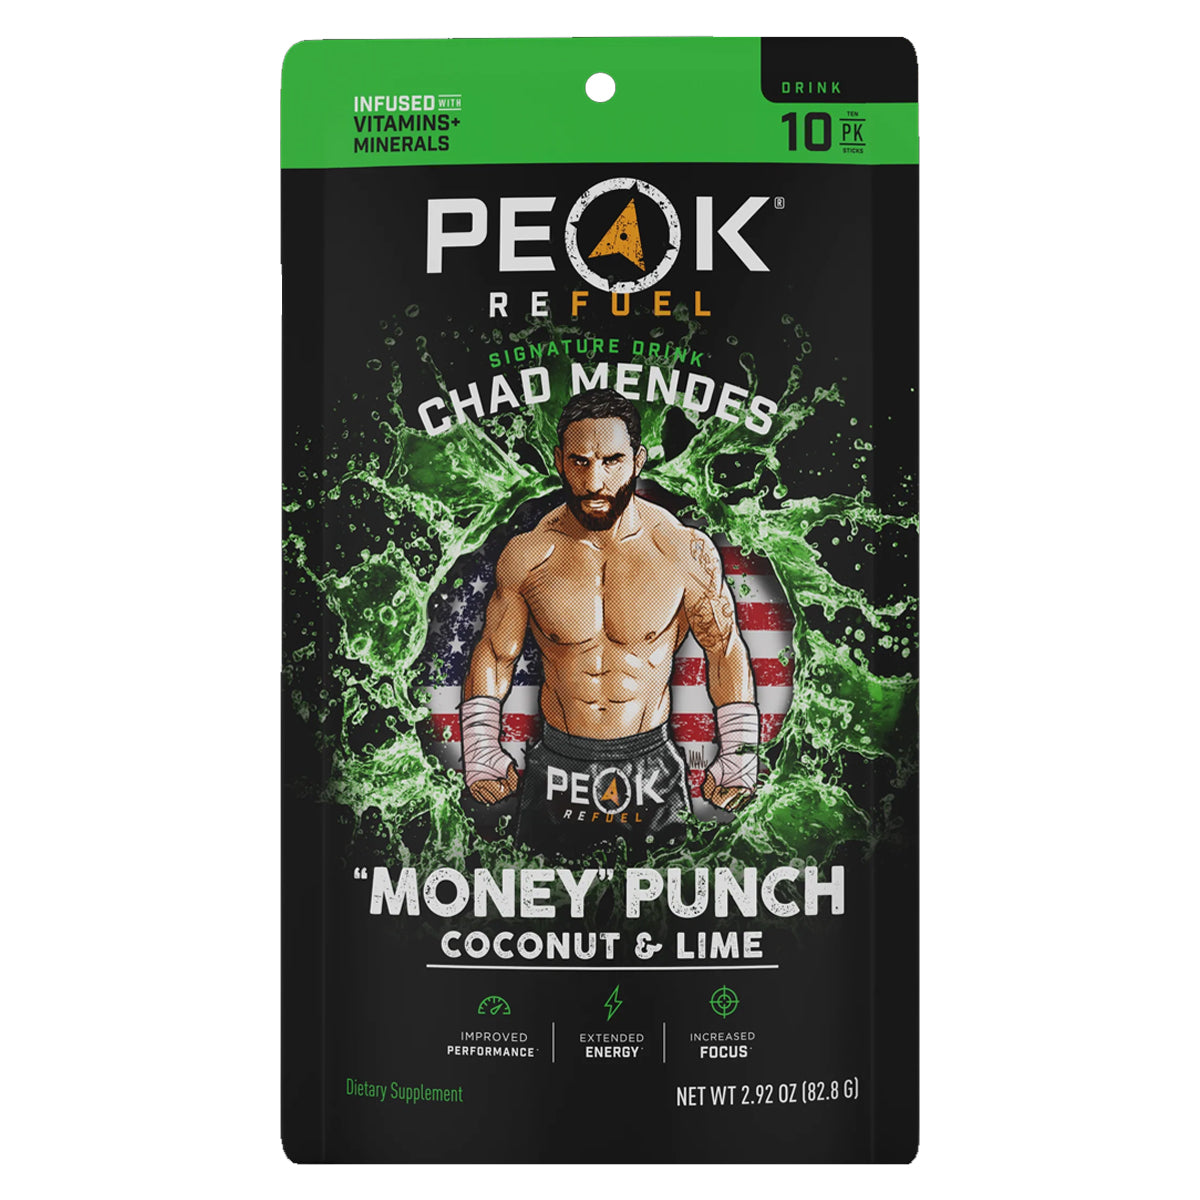 Peak Refuel "Money" Punch - 10 Count